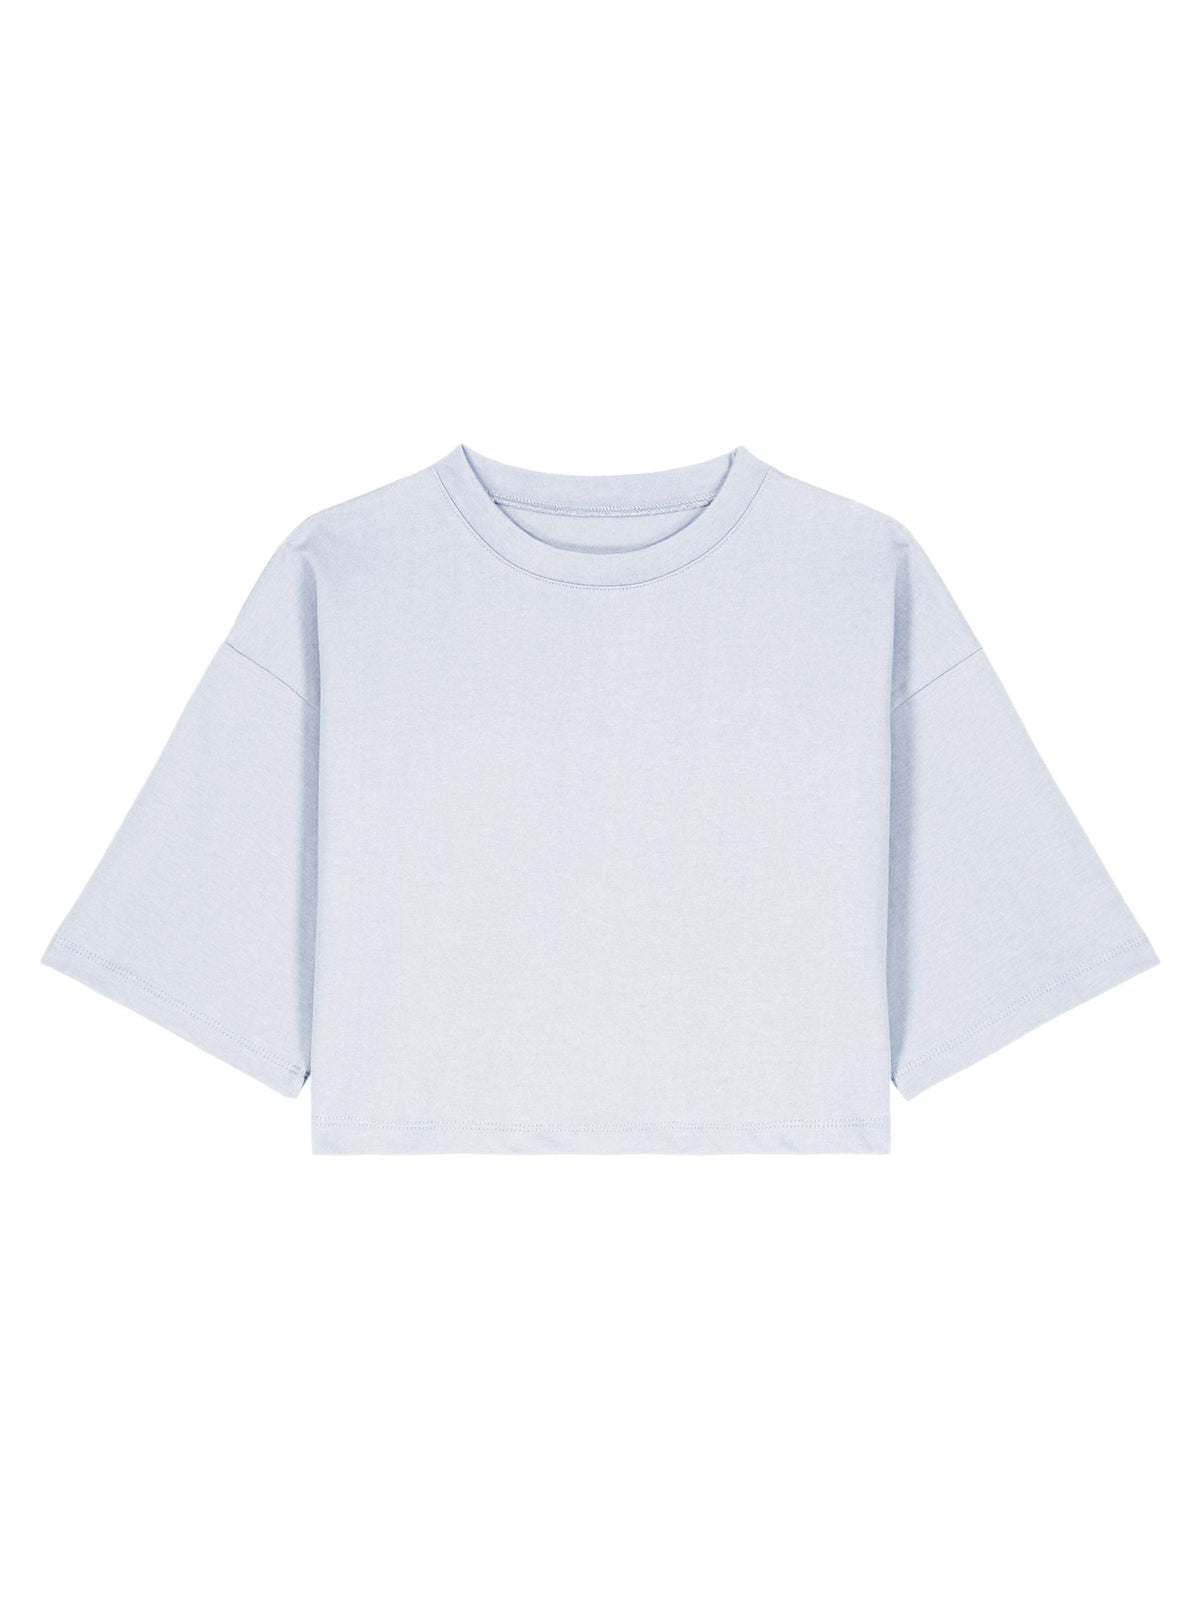 FRANKIE SHOP Karina Cropped T-Shirt / Sky - Seletti Concept Store